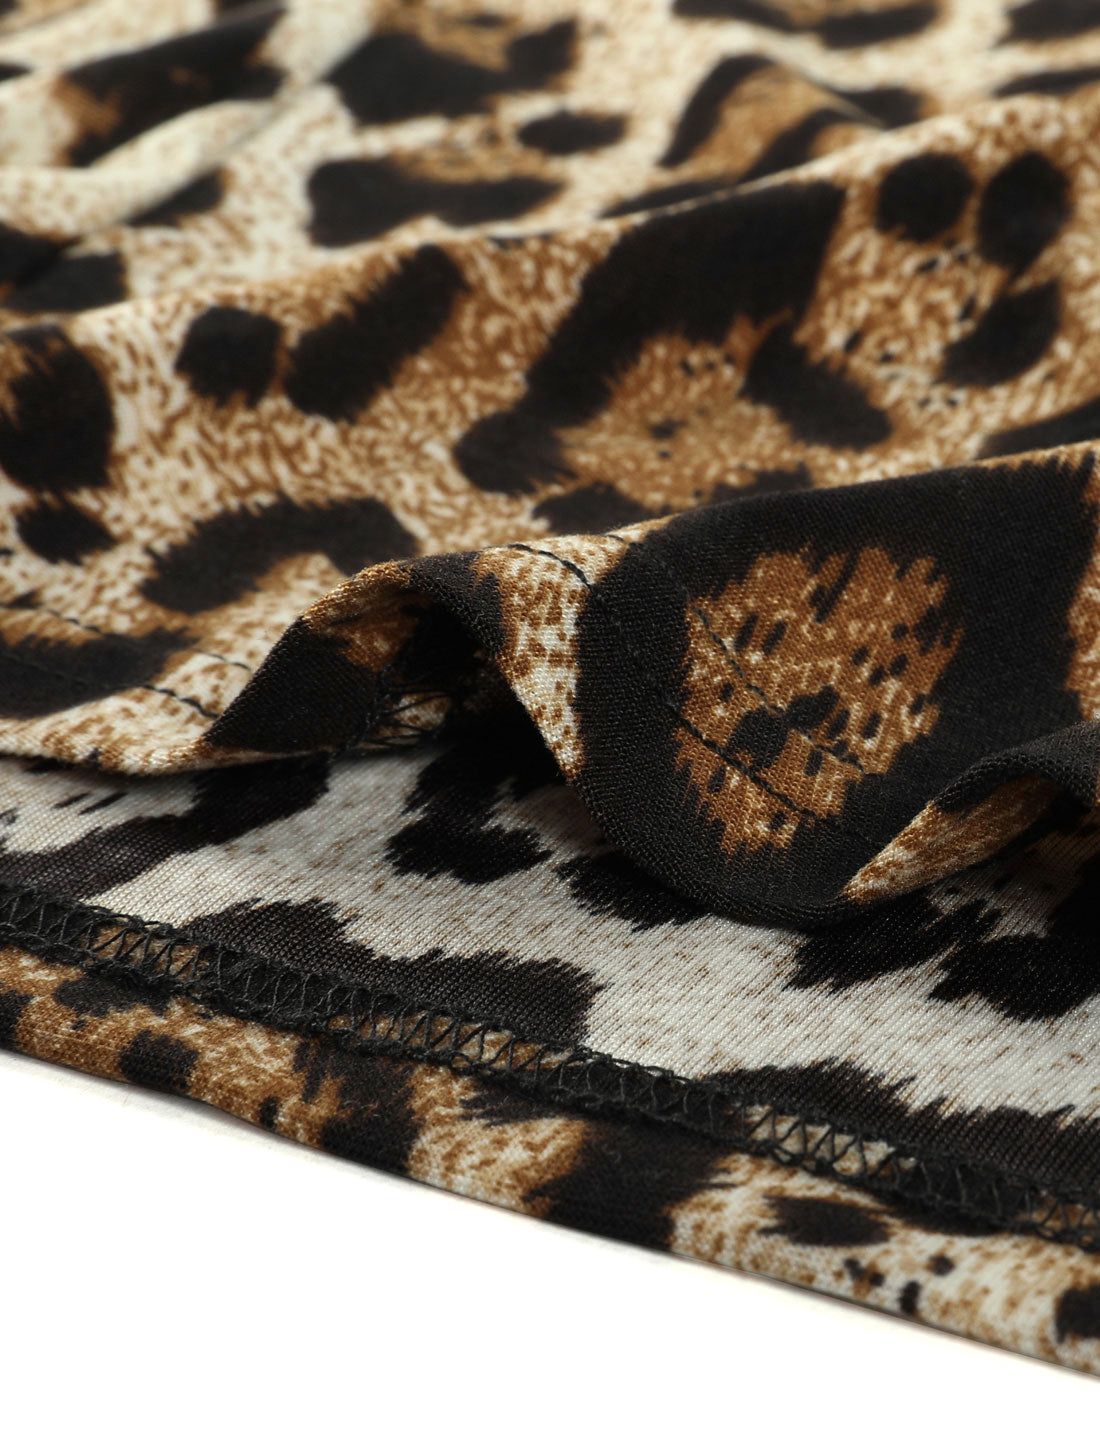 Bublédon Casual Plus Size Leopard Print Asymmetric Cardigan